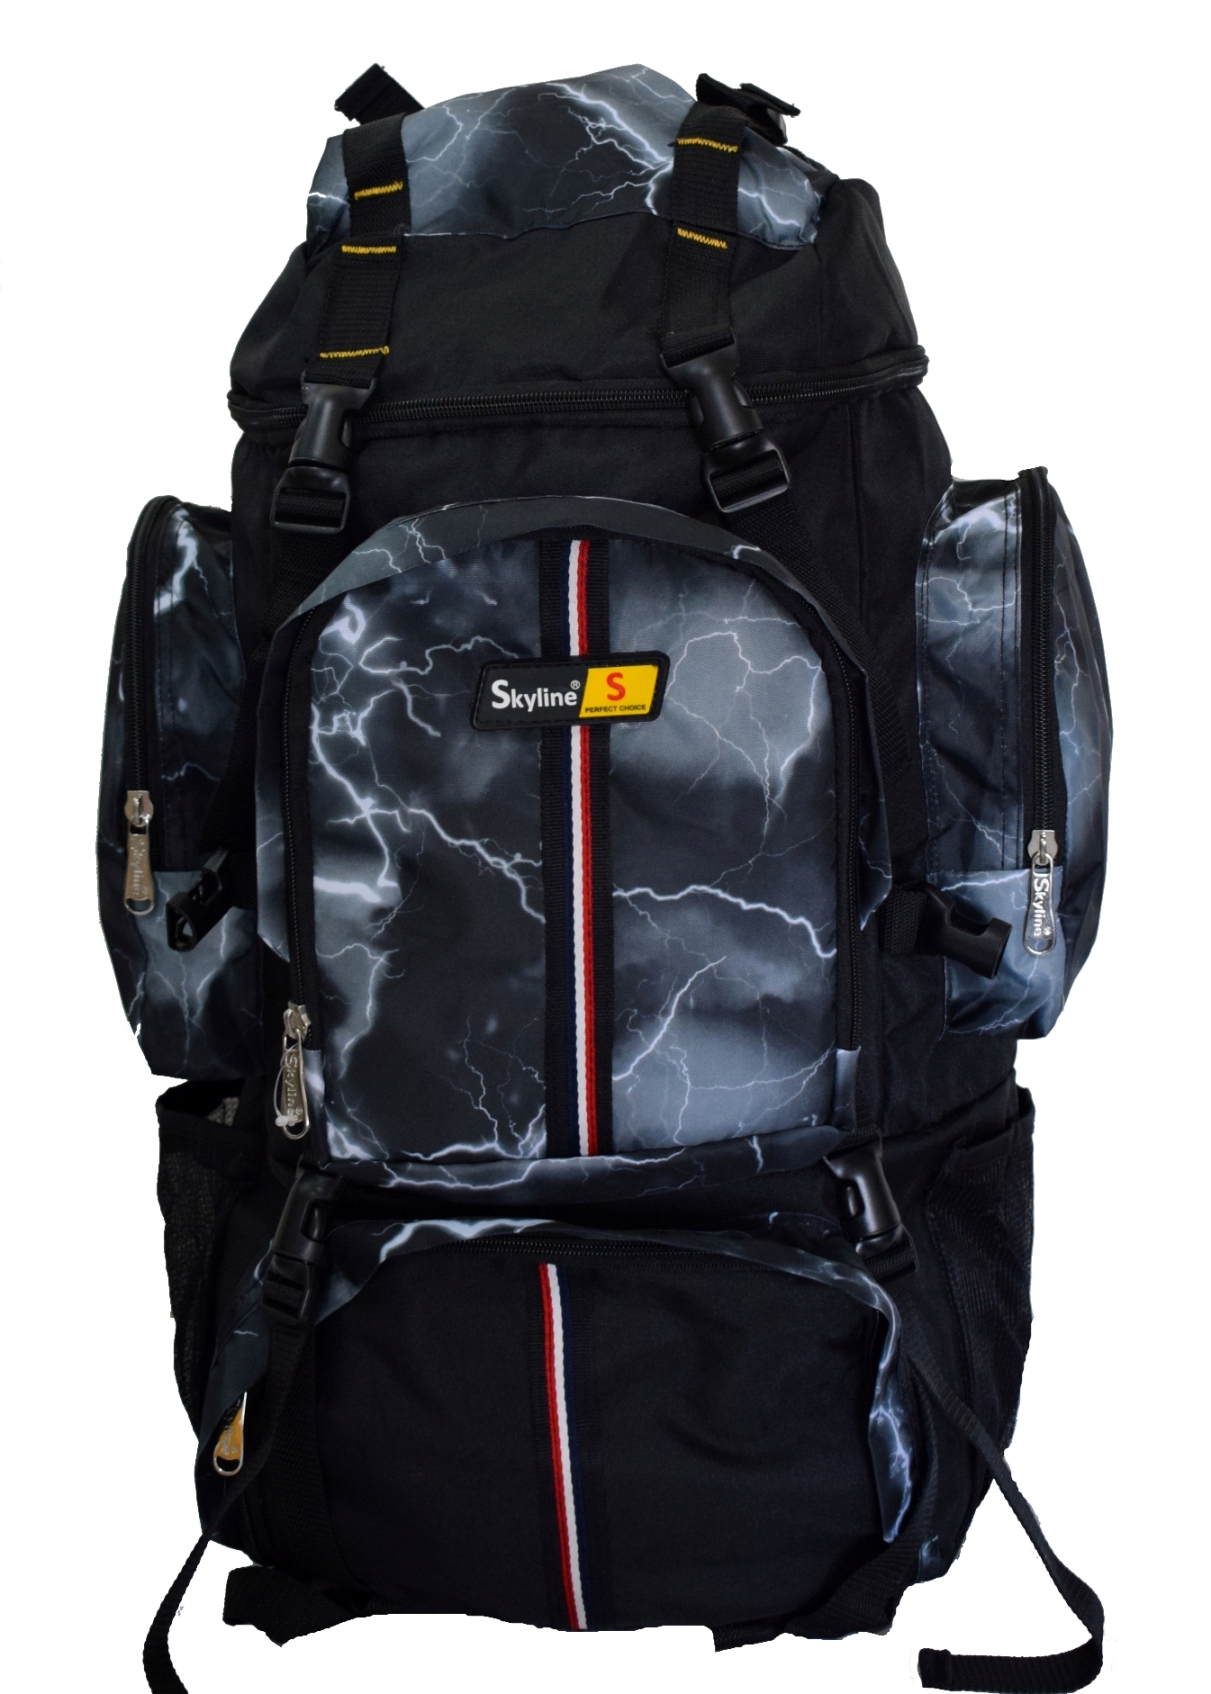 Skyline 25L Unisex Hiking/Trekking/Travelling/Camping Backpack Bag Rucksack Bag With Warranty Grey 2407